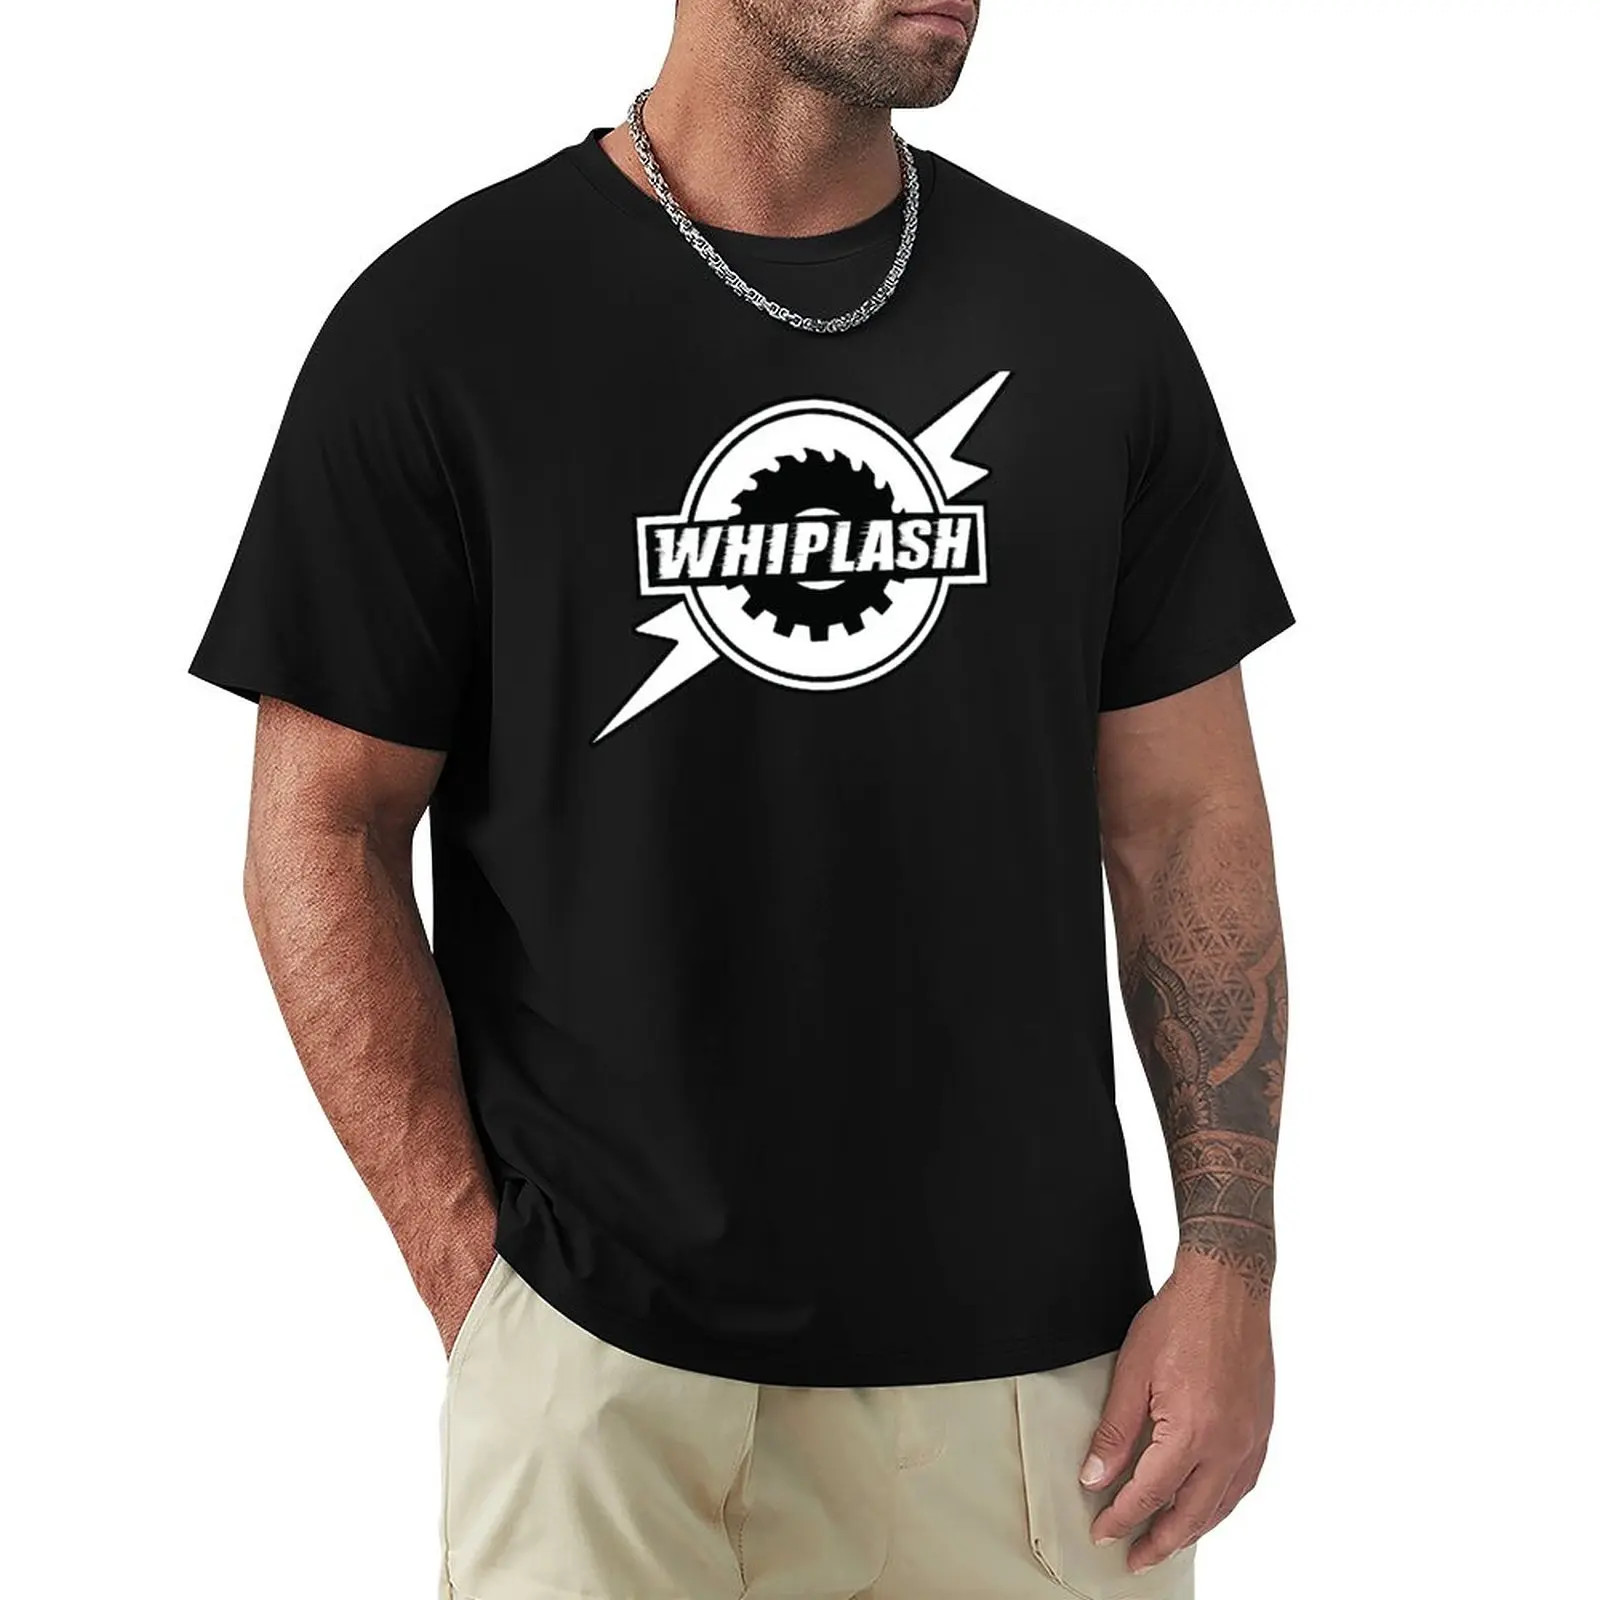 Футболка с логотипом Whiplash, футболки с графическим рисунком, футболки С коротким рукавом, Блузка, Мужская одежда